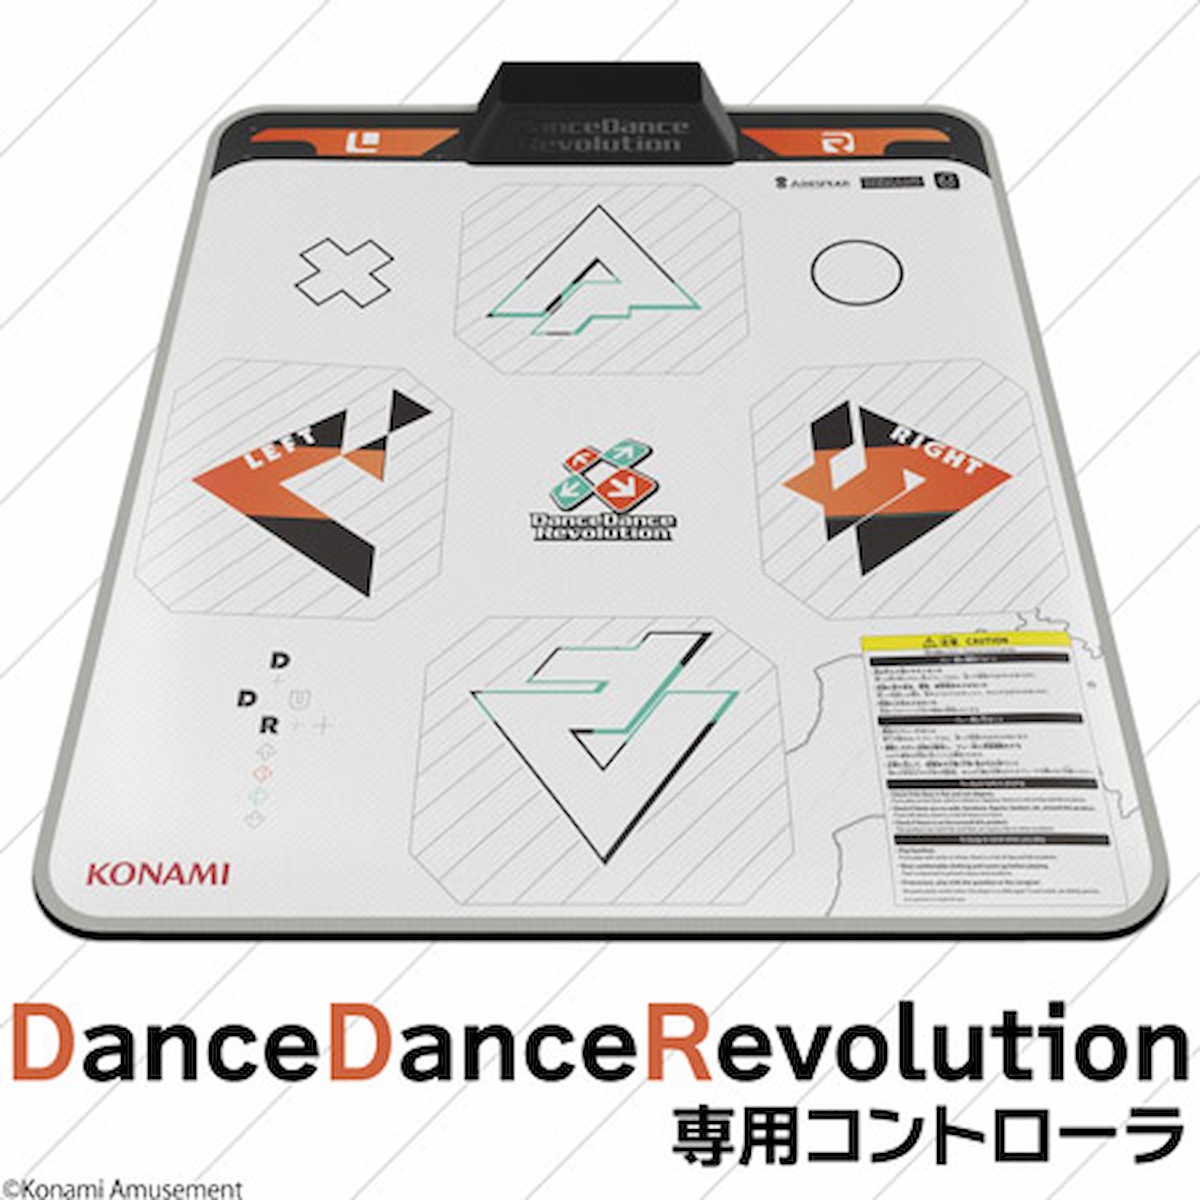 DanceDanceRevolution 専用コントローラ